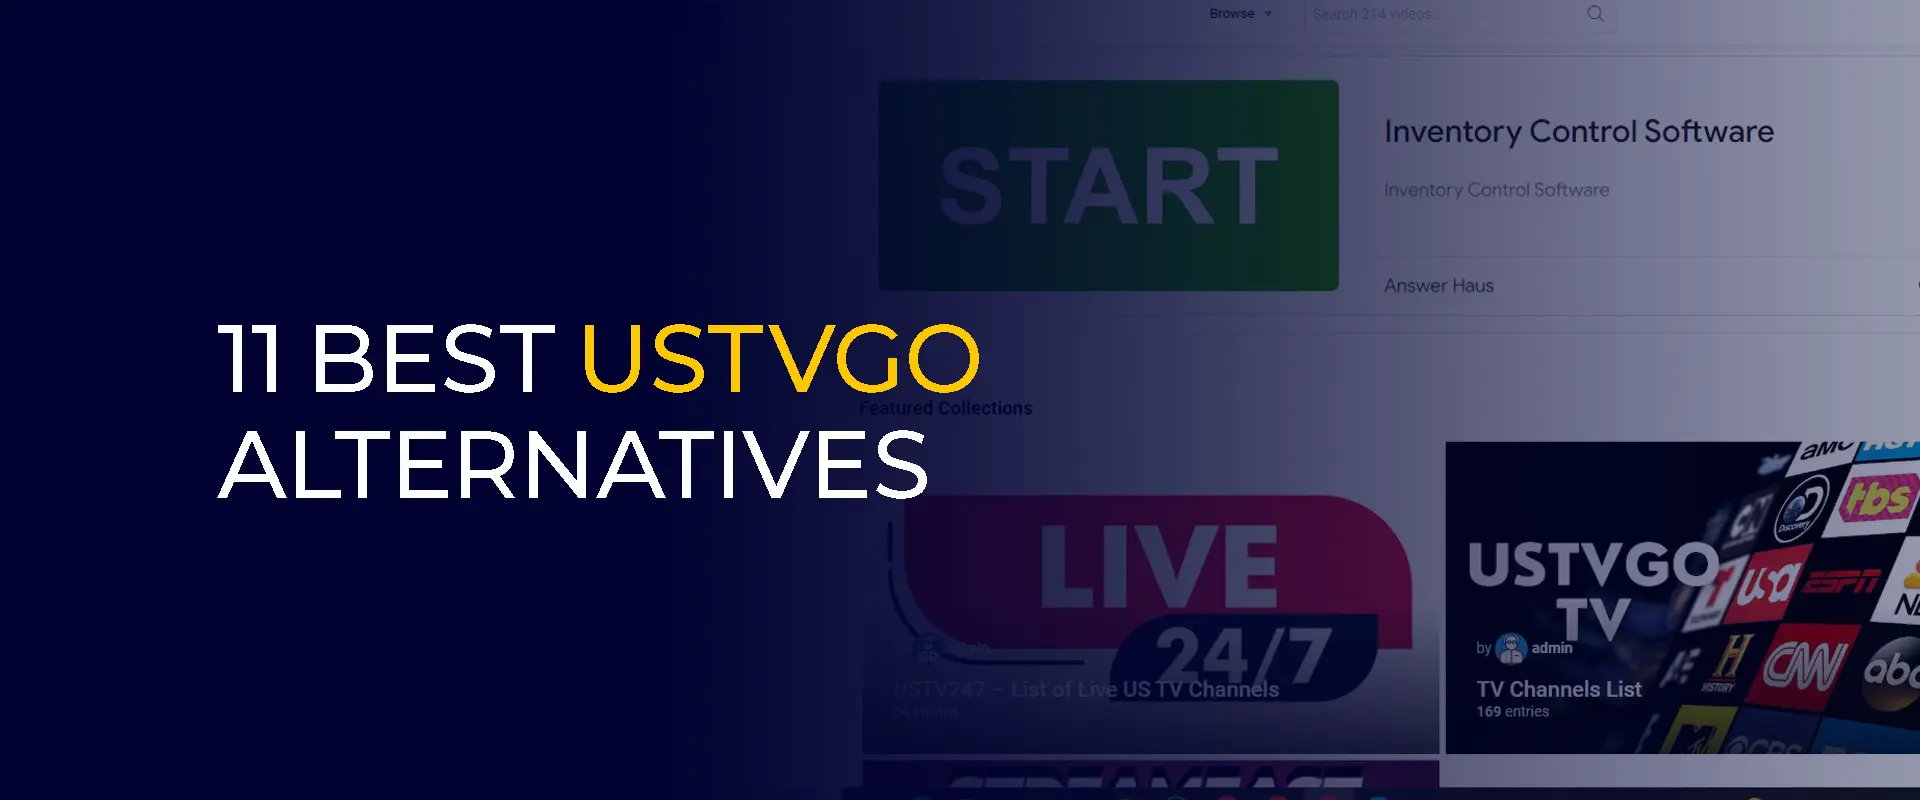 Die 11 besten USTVGO-Alternativen